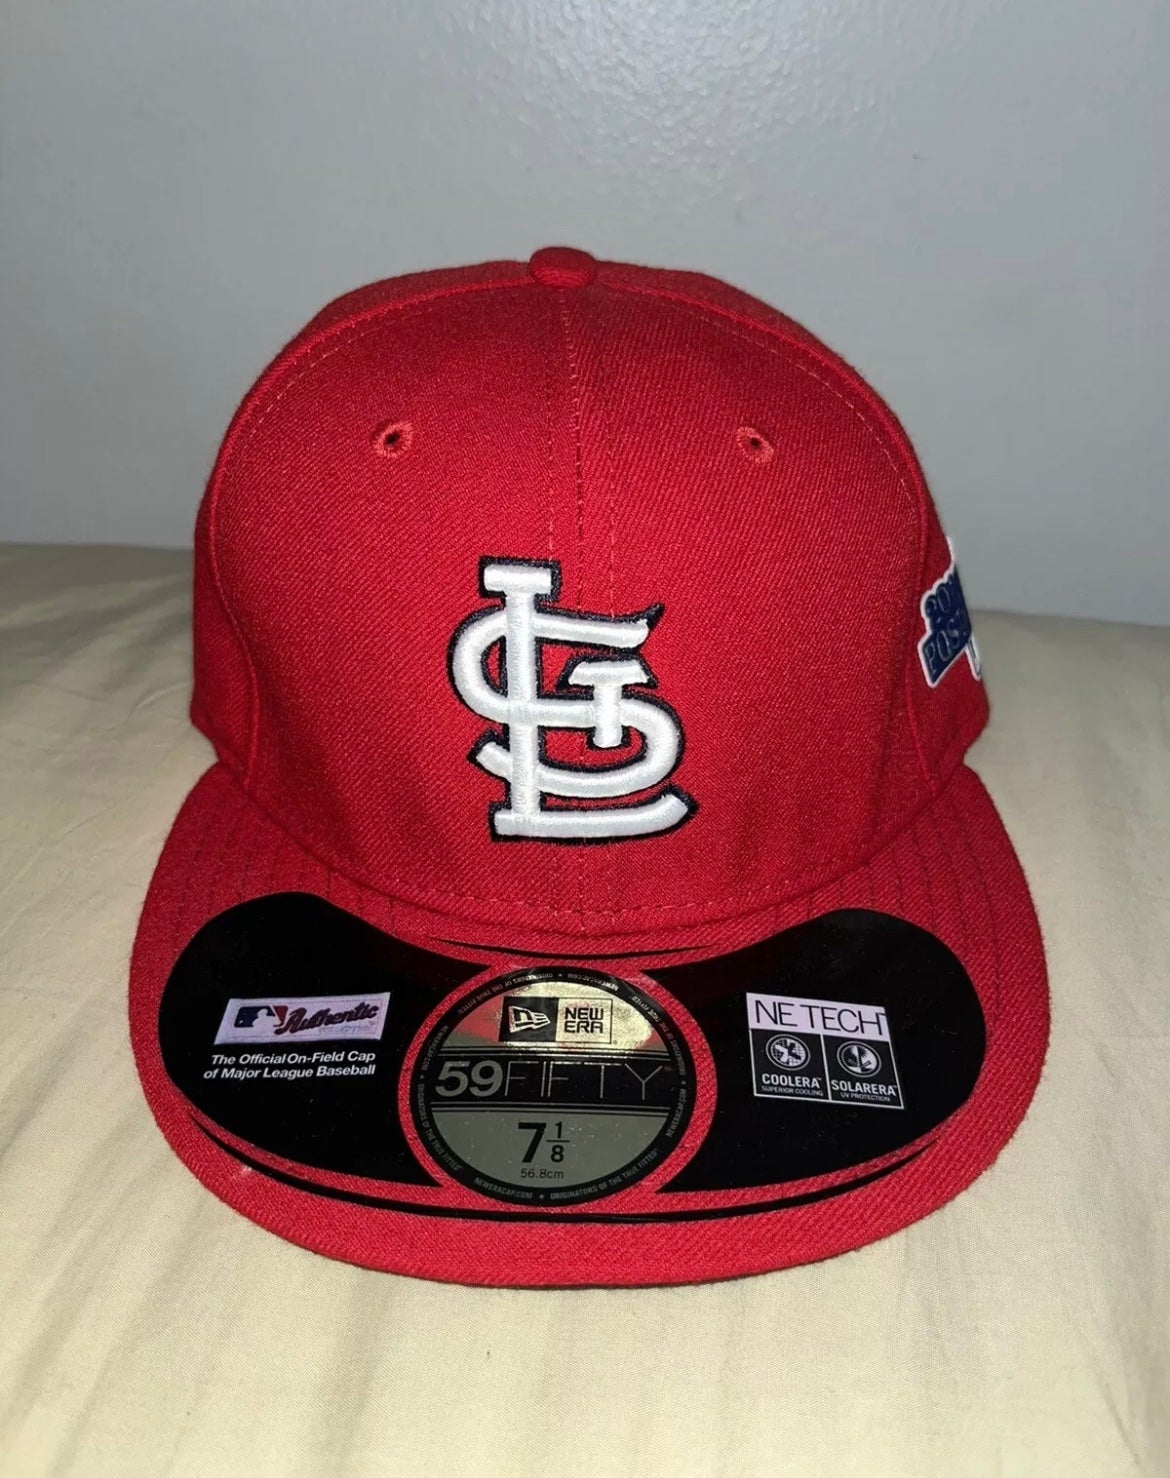 St. Louis Cardinals Retro Jersey Script 59FIFTY Fitted Hat – New Era Cap